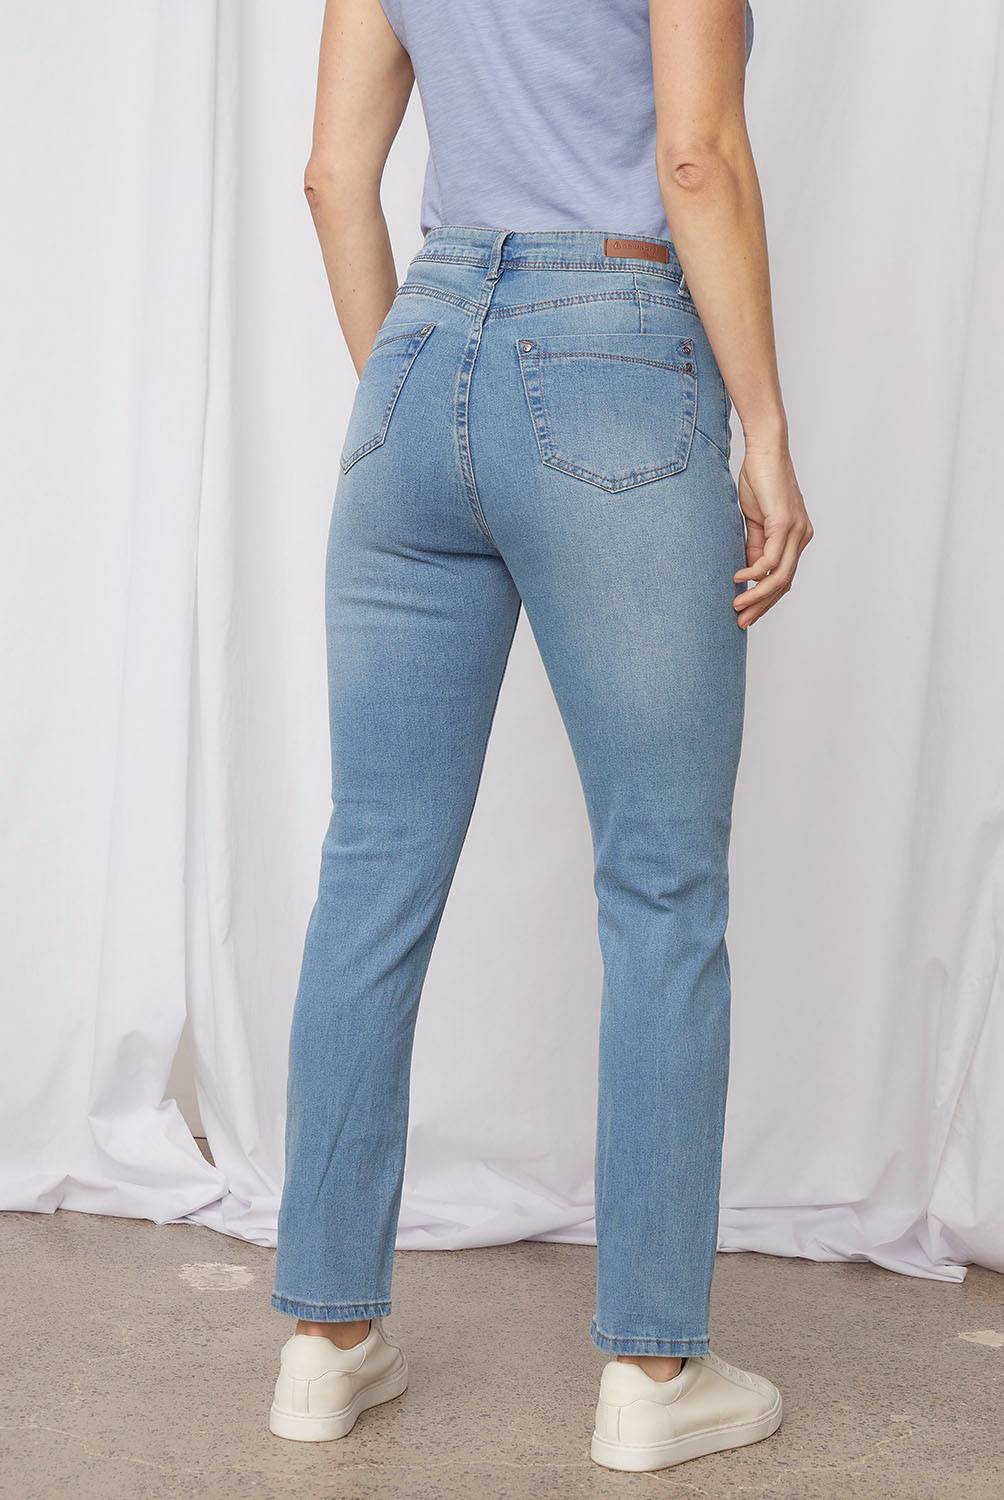 NEWPORT - Jeans Skinny Tiro Alto Mujer Newport